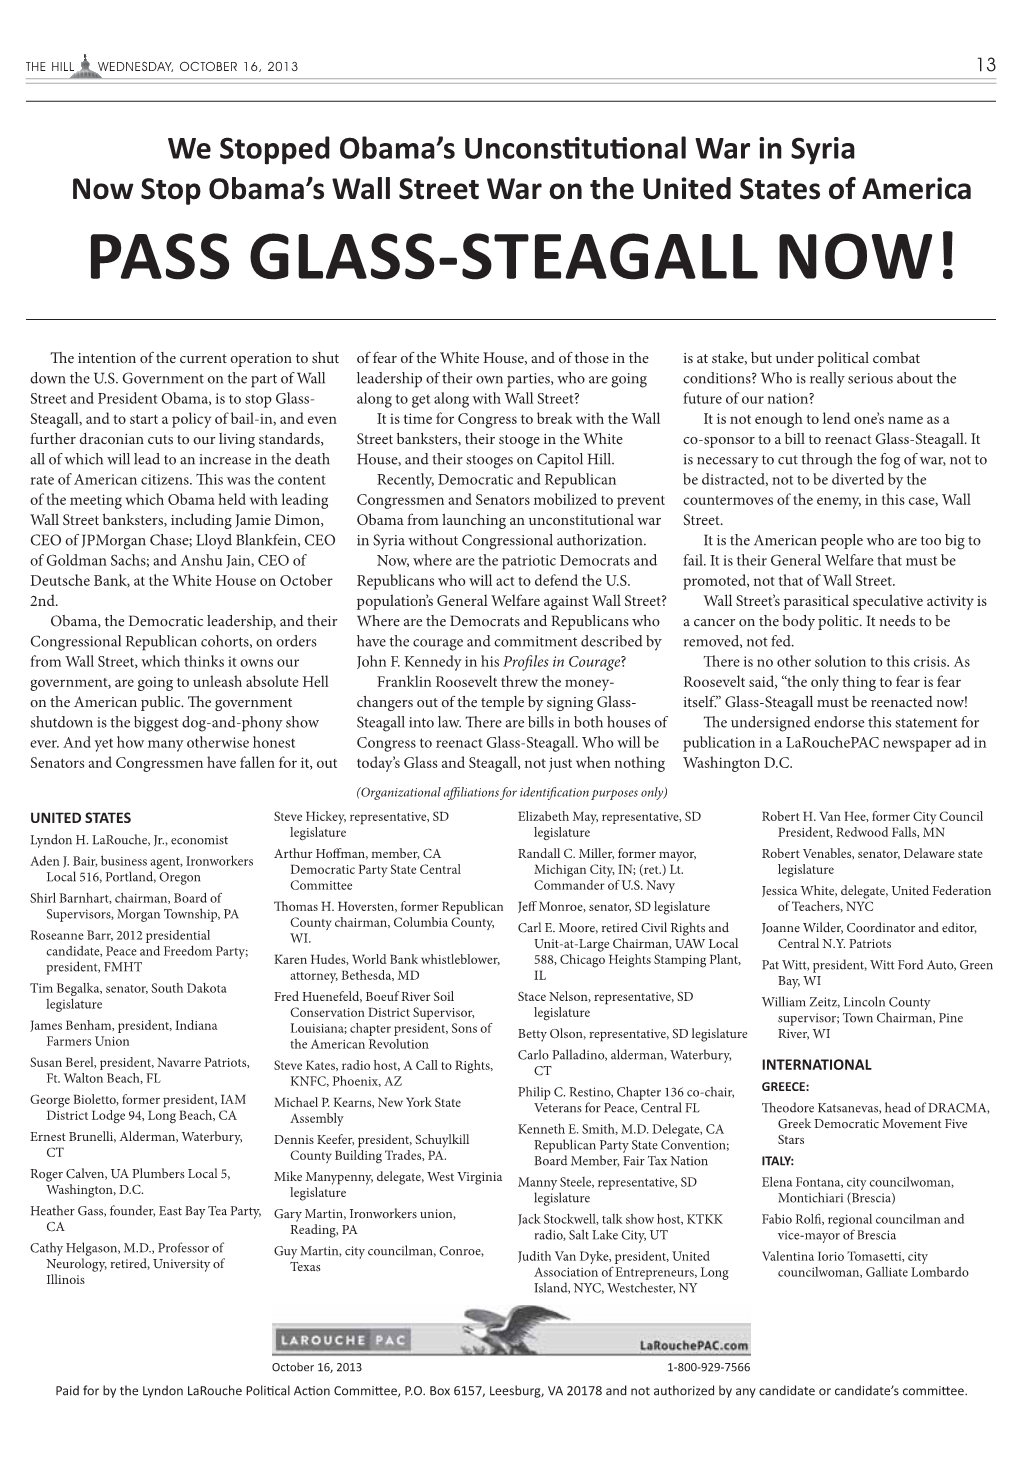 Pass Glass-Steagall Now!